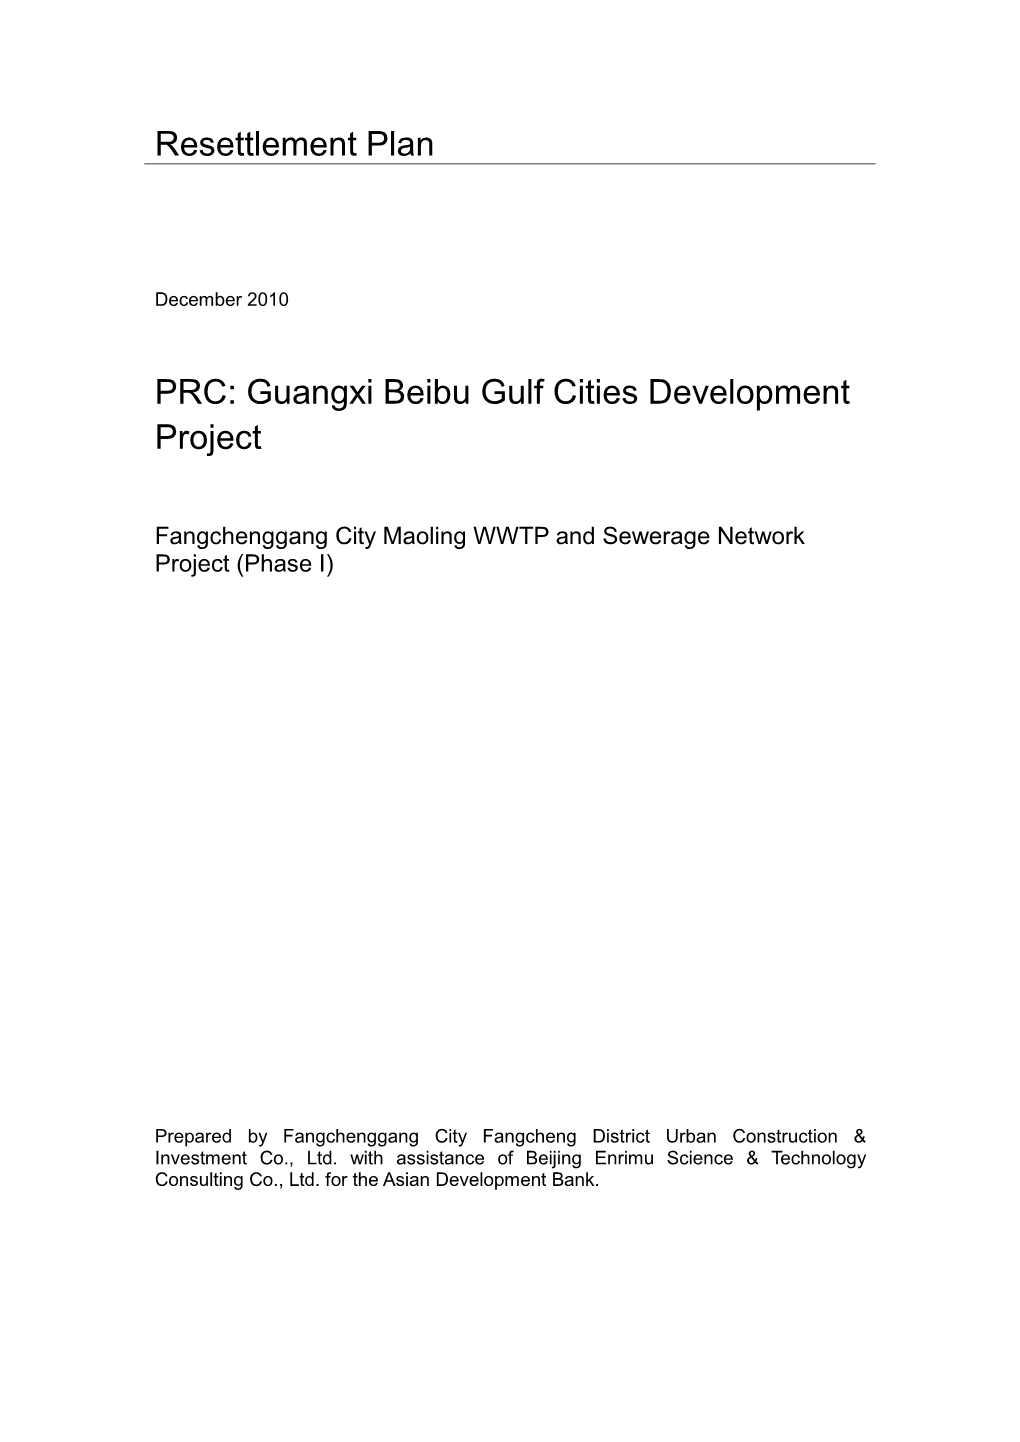 Guangxi Beibu Gulf Cities Development Project